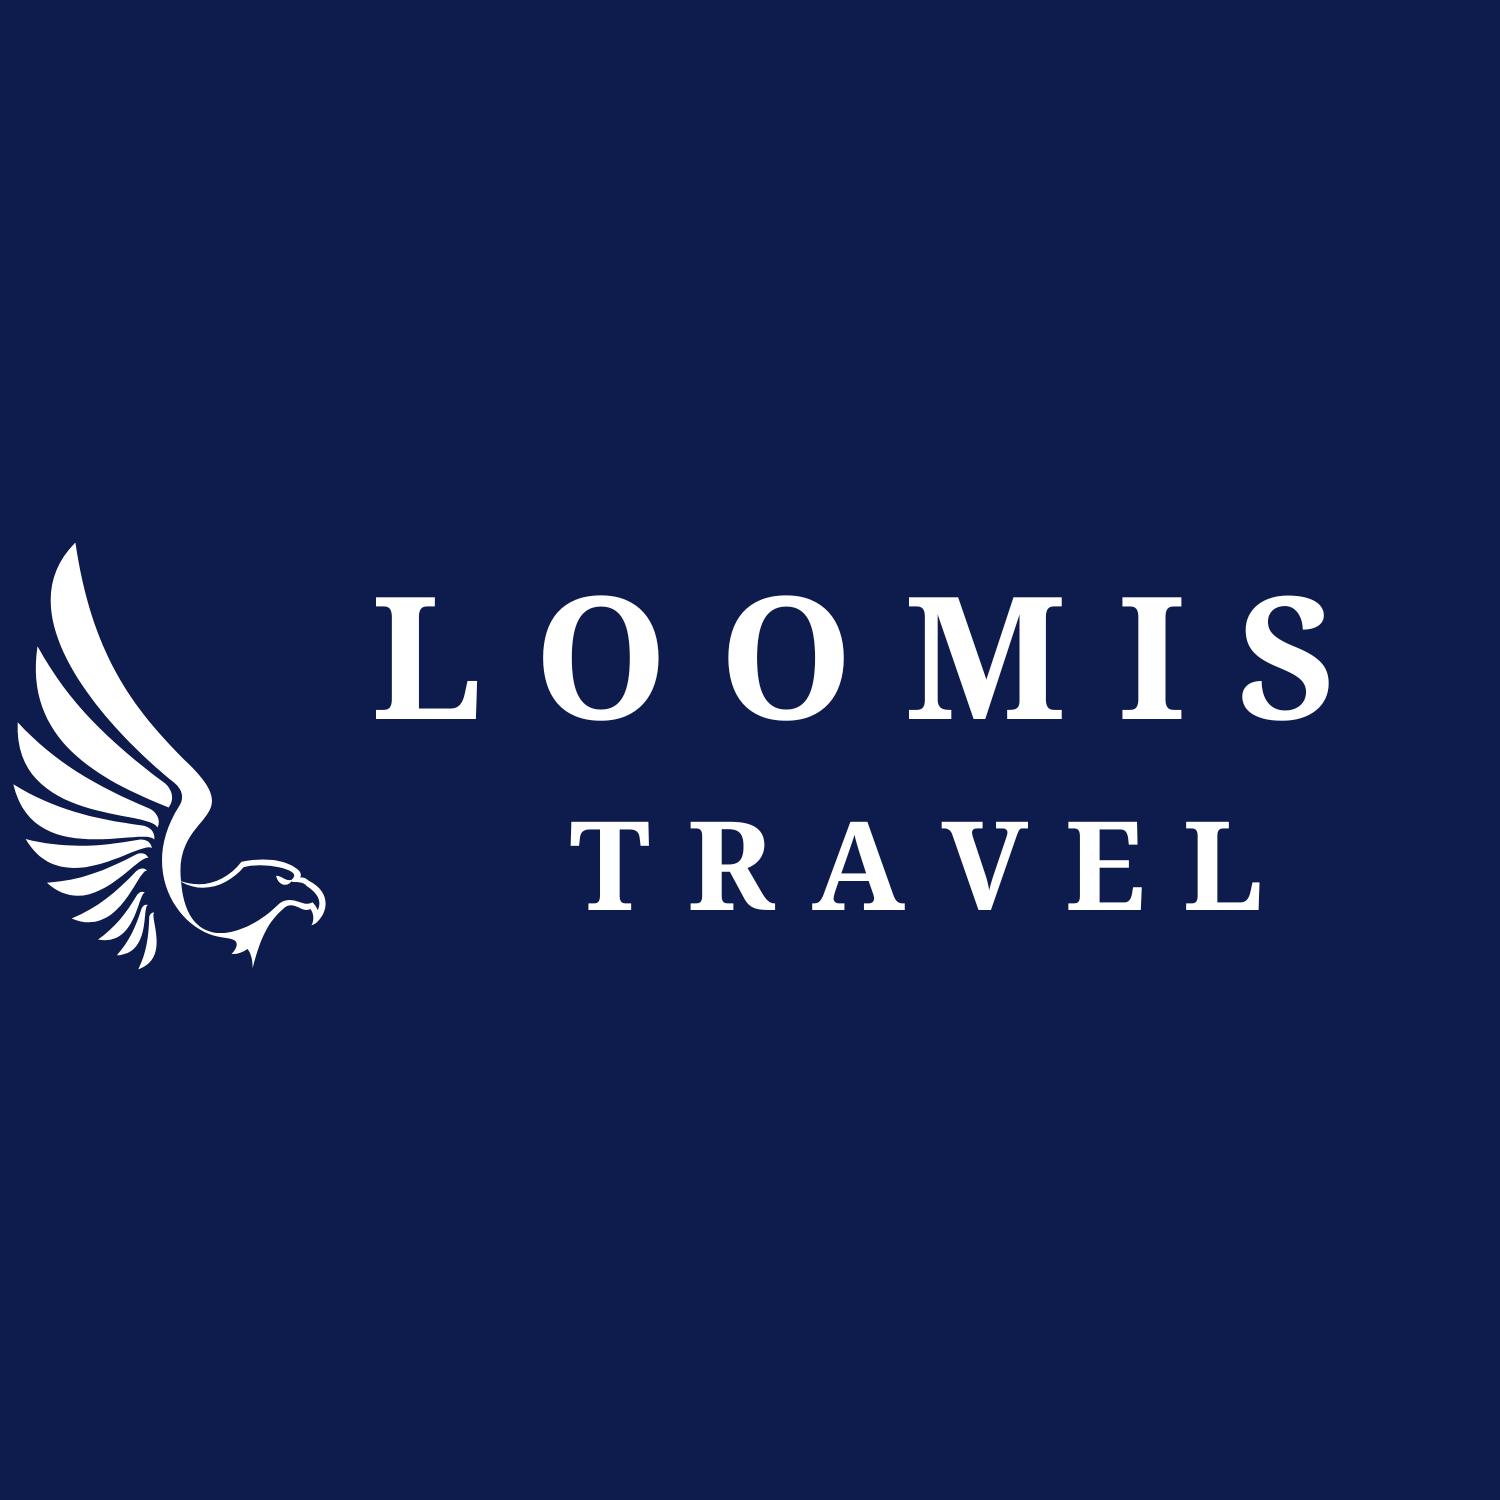 Loomis Travel